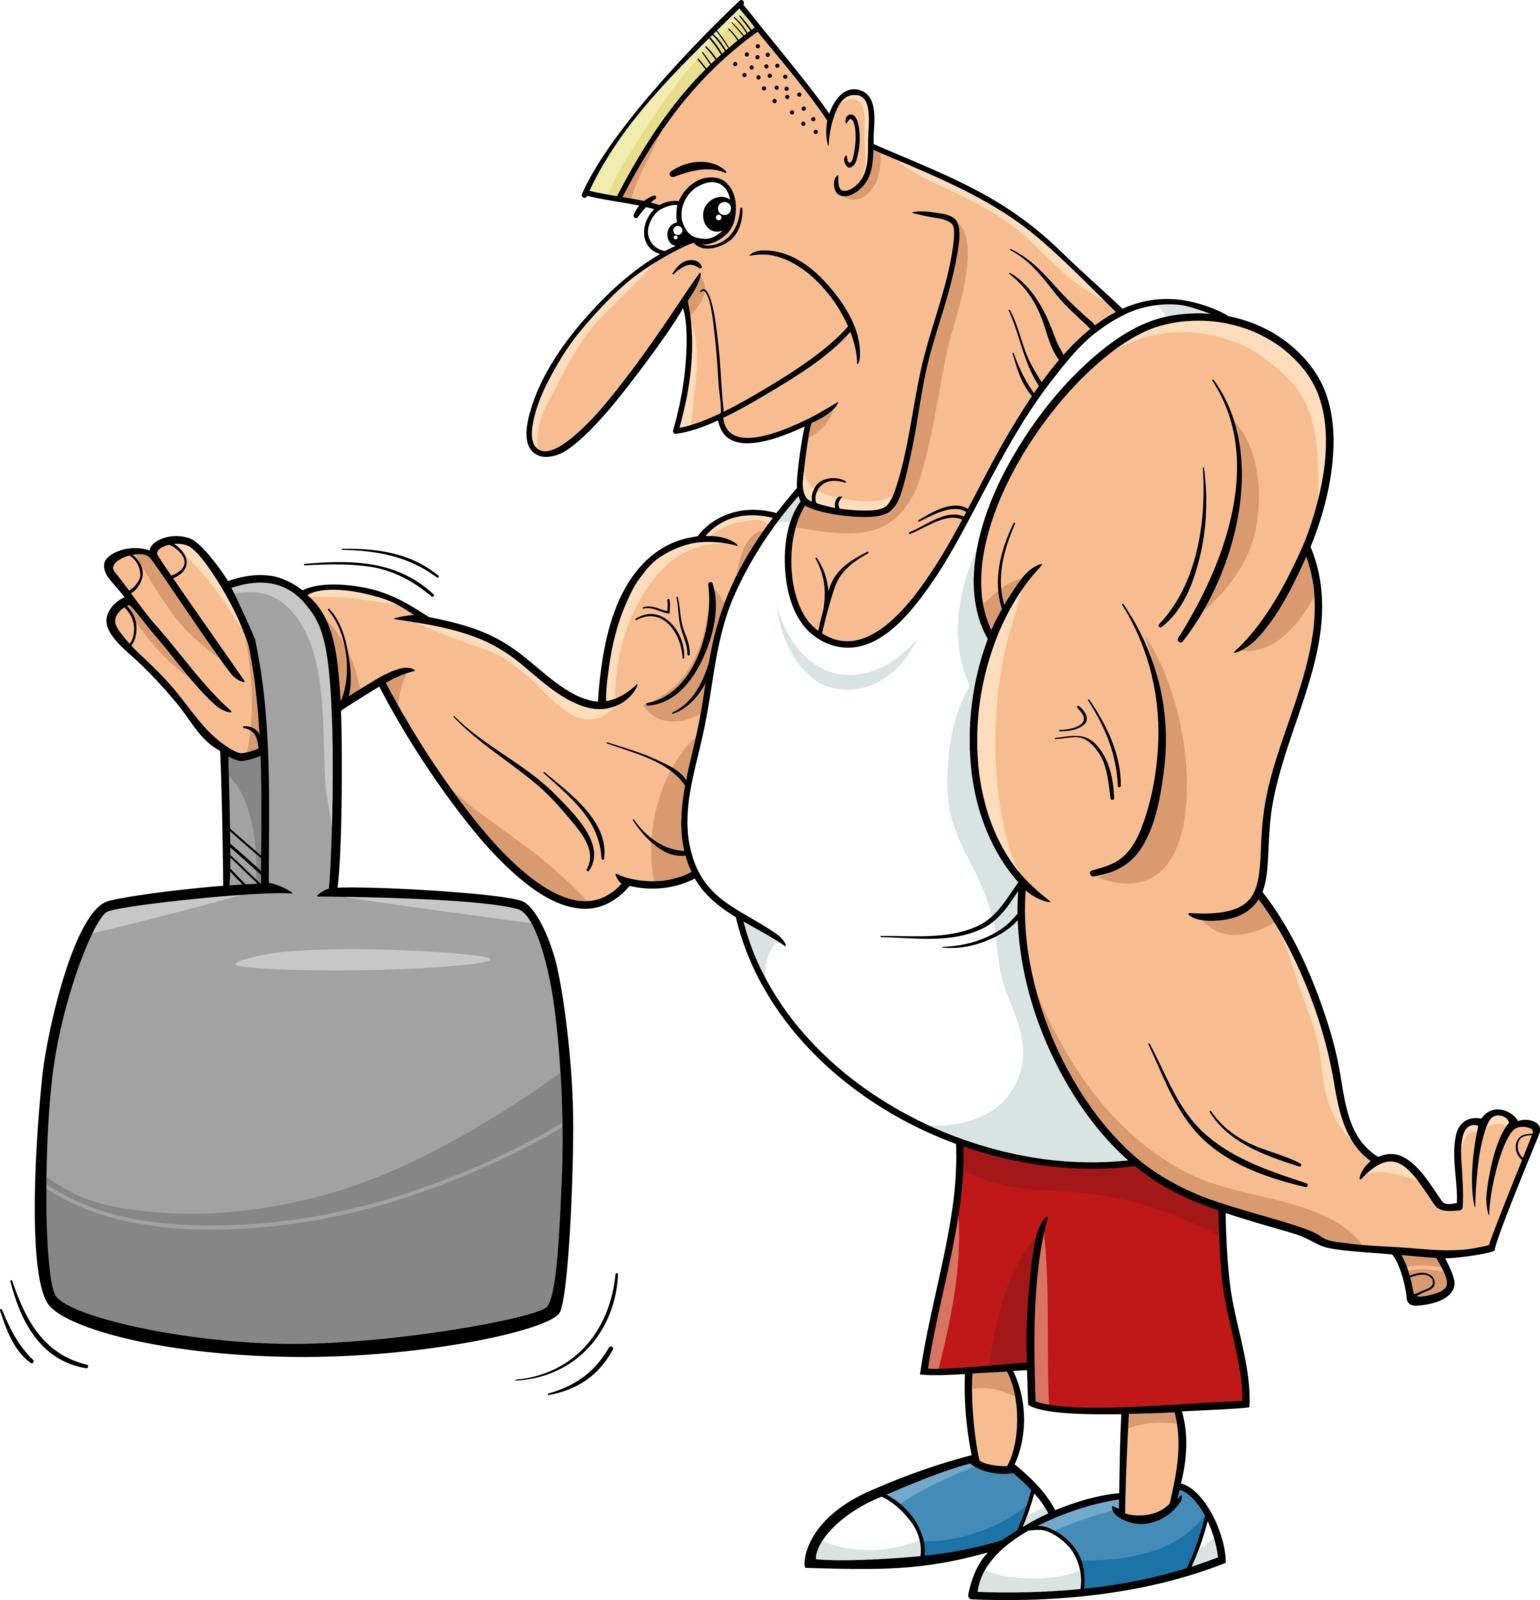 strong man athlete cartoon illustration by izakowski